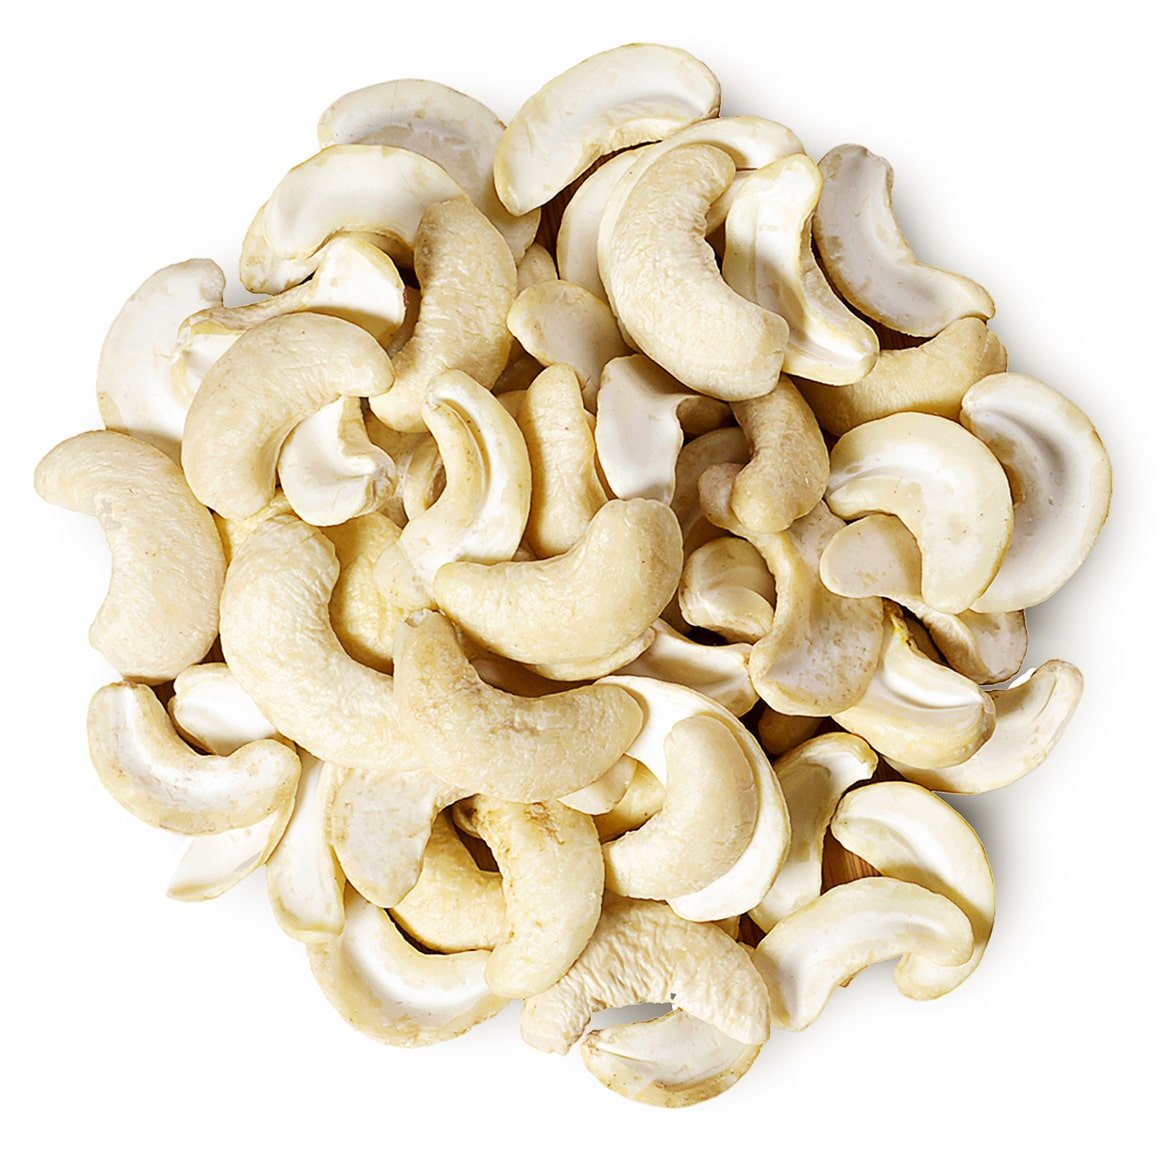 conventional-cashew-pieces-main-min